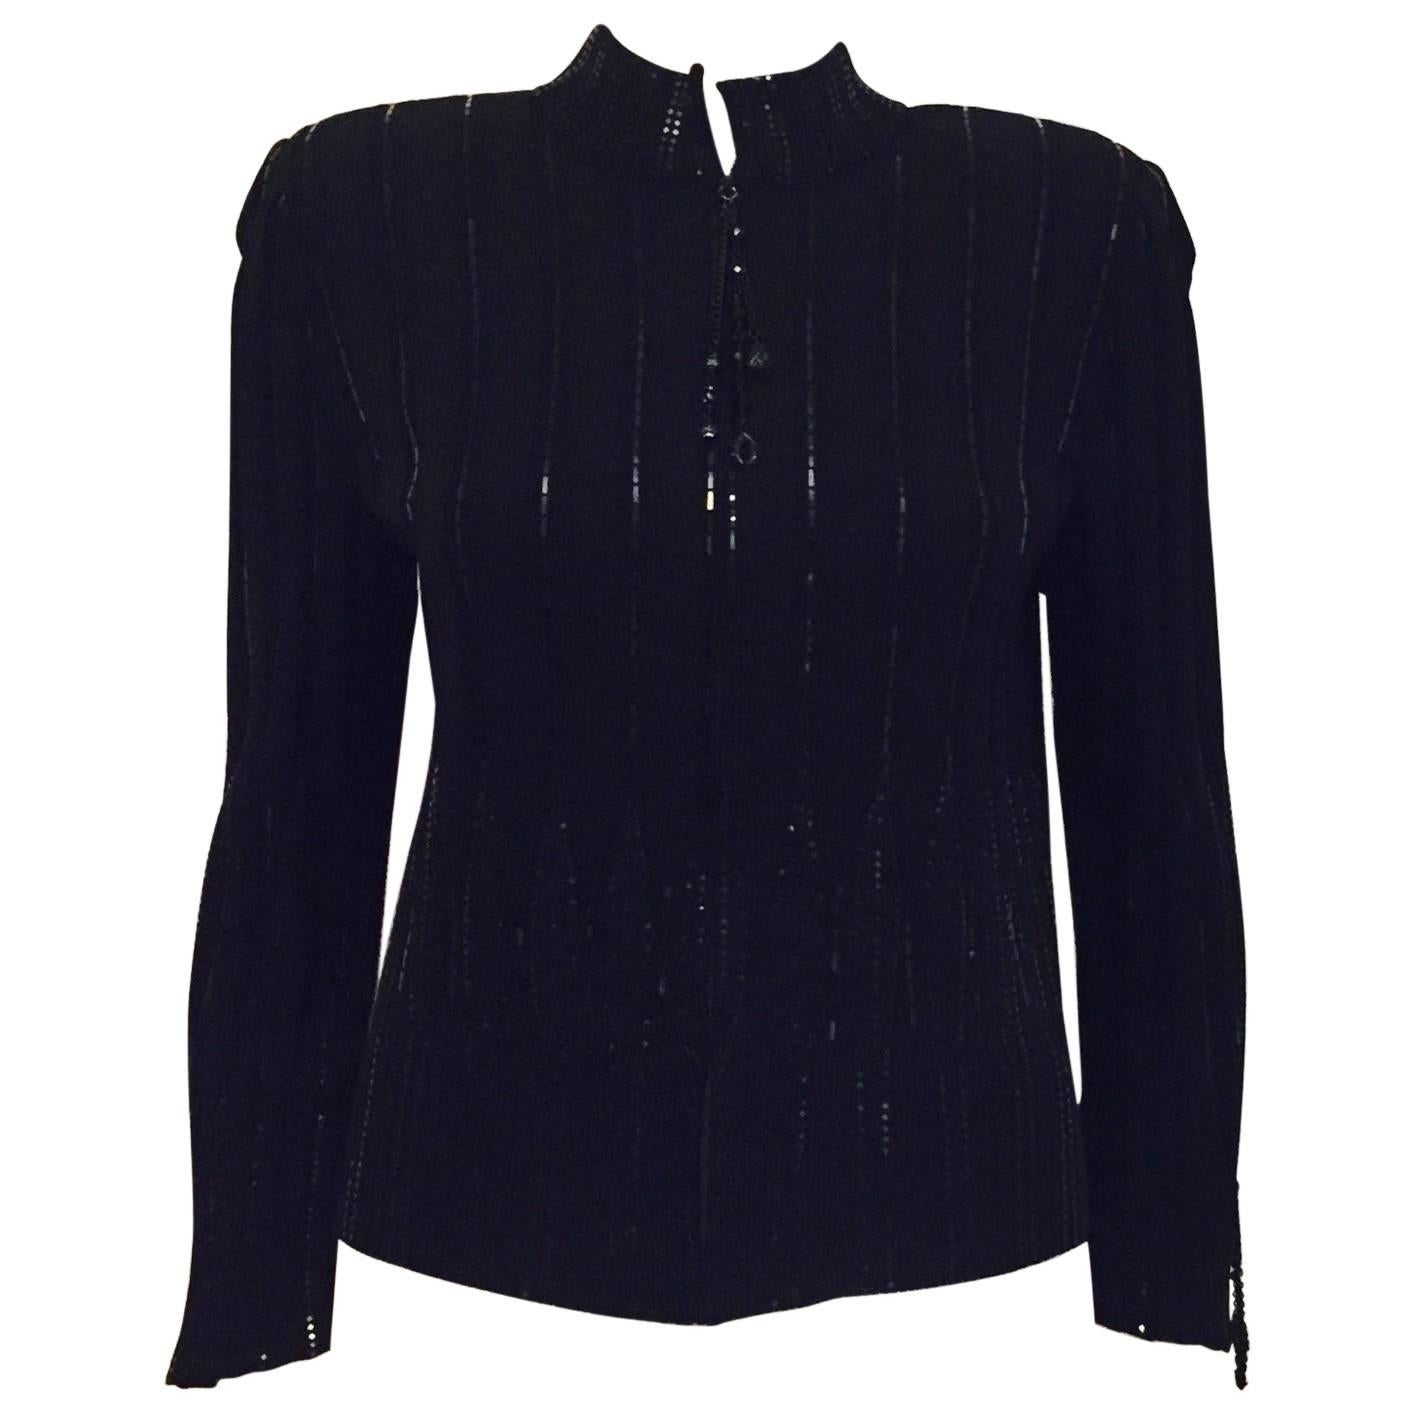 St. John Evening Black Tasseled Cardigan Jacket with Zipper